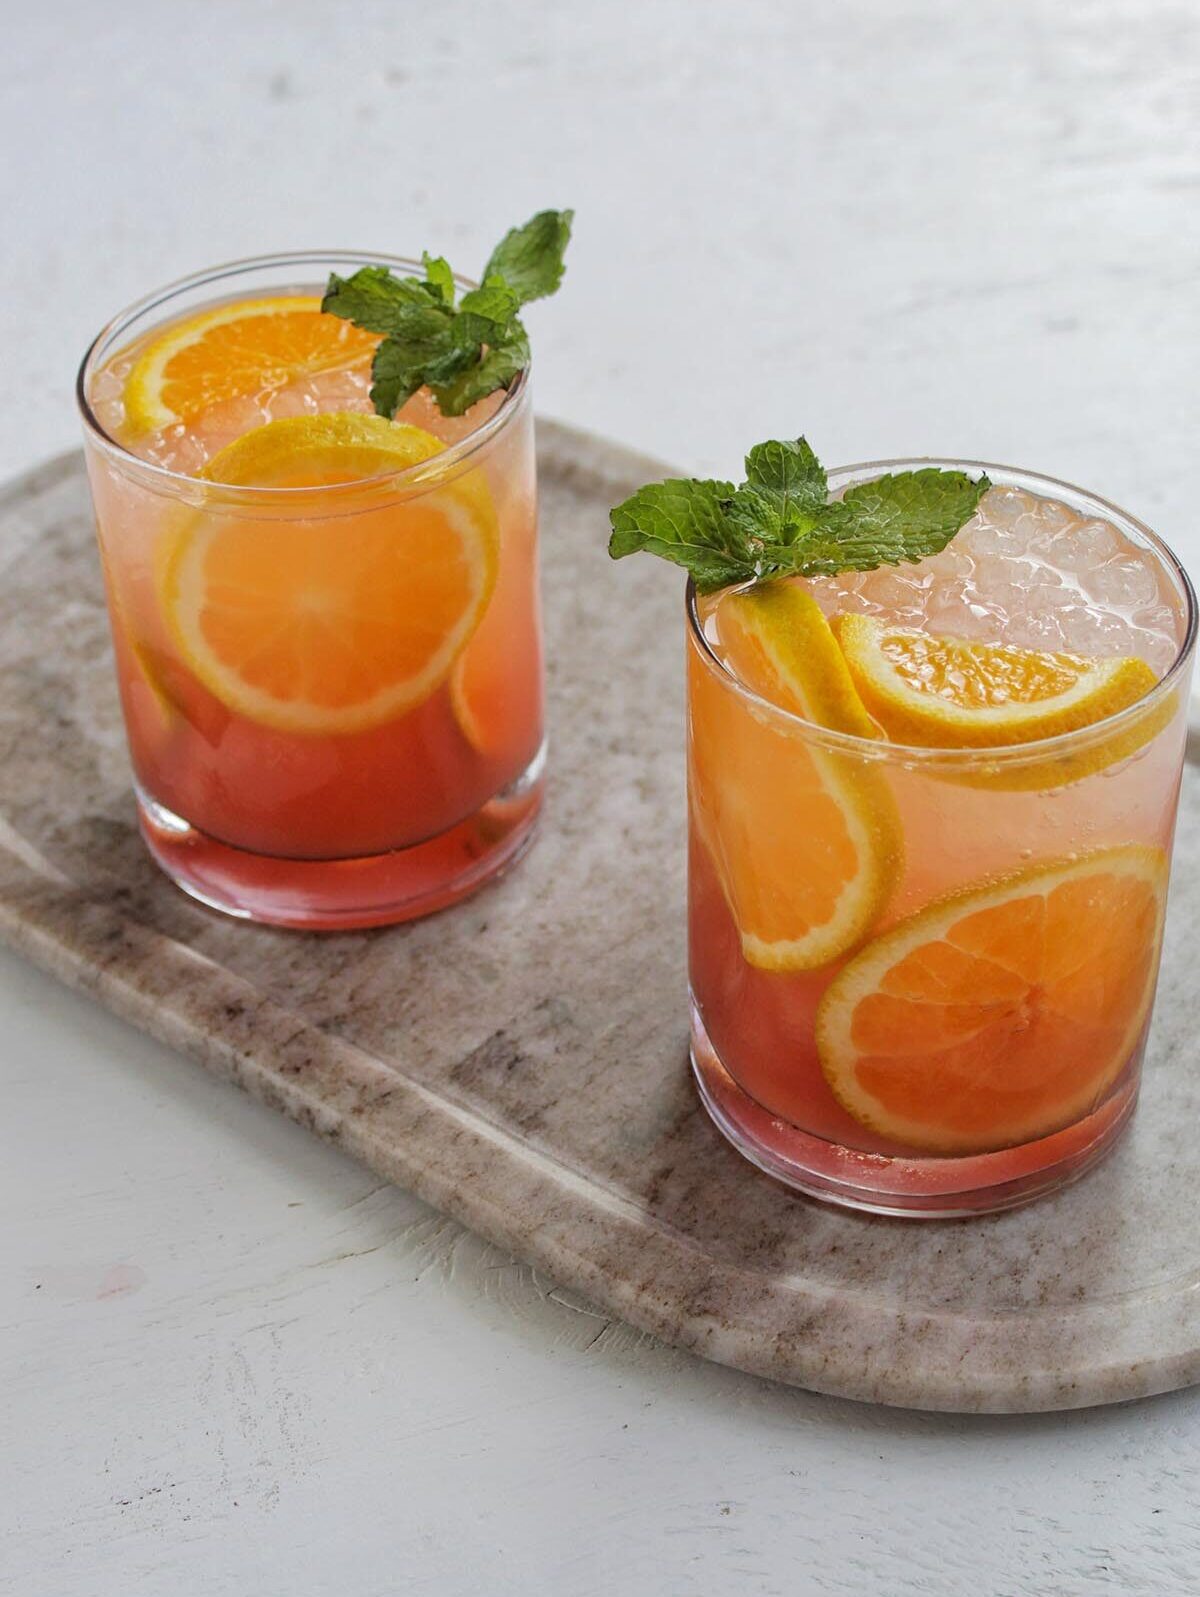 blackberry orange cocktail refresher with titos-2 glasses with orange garnish